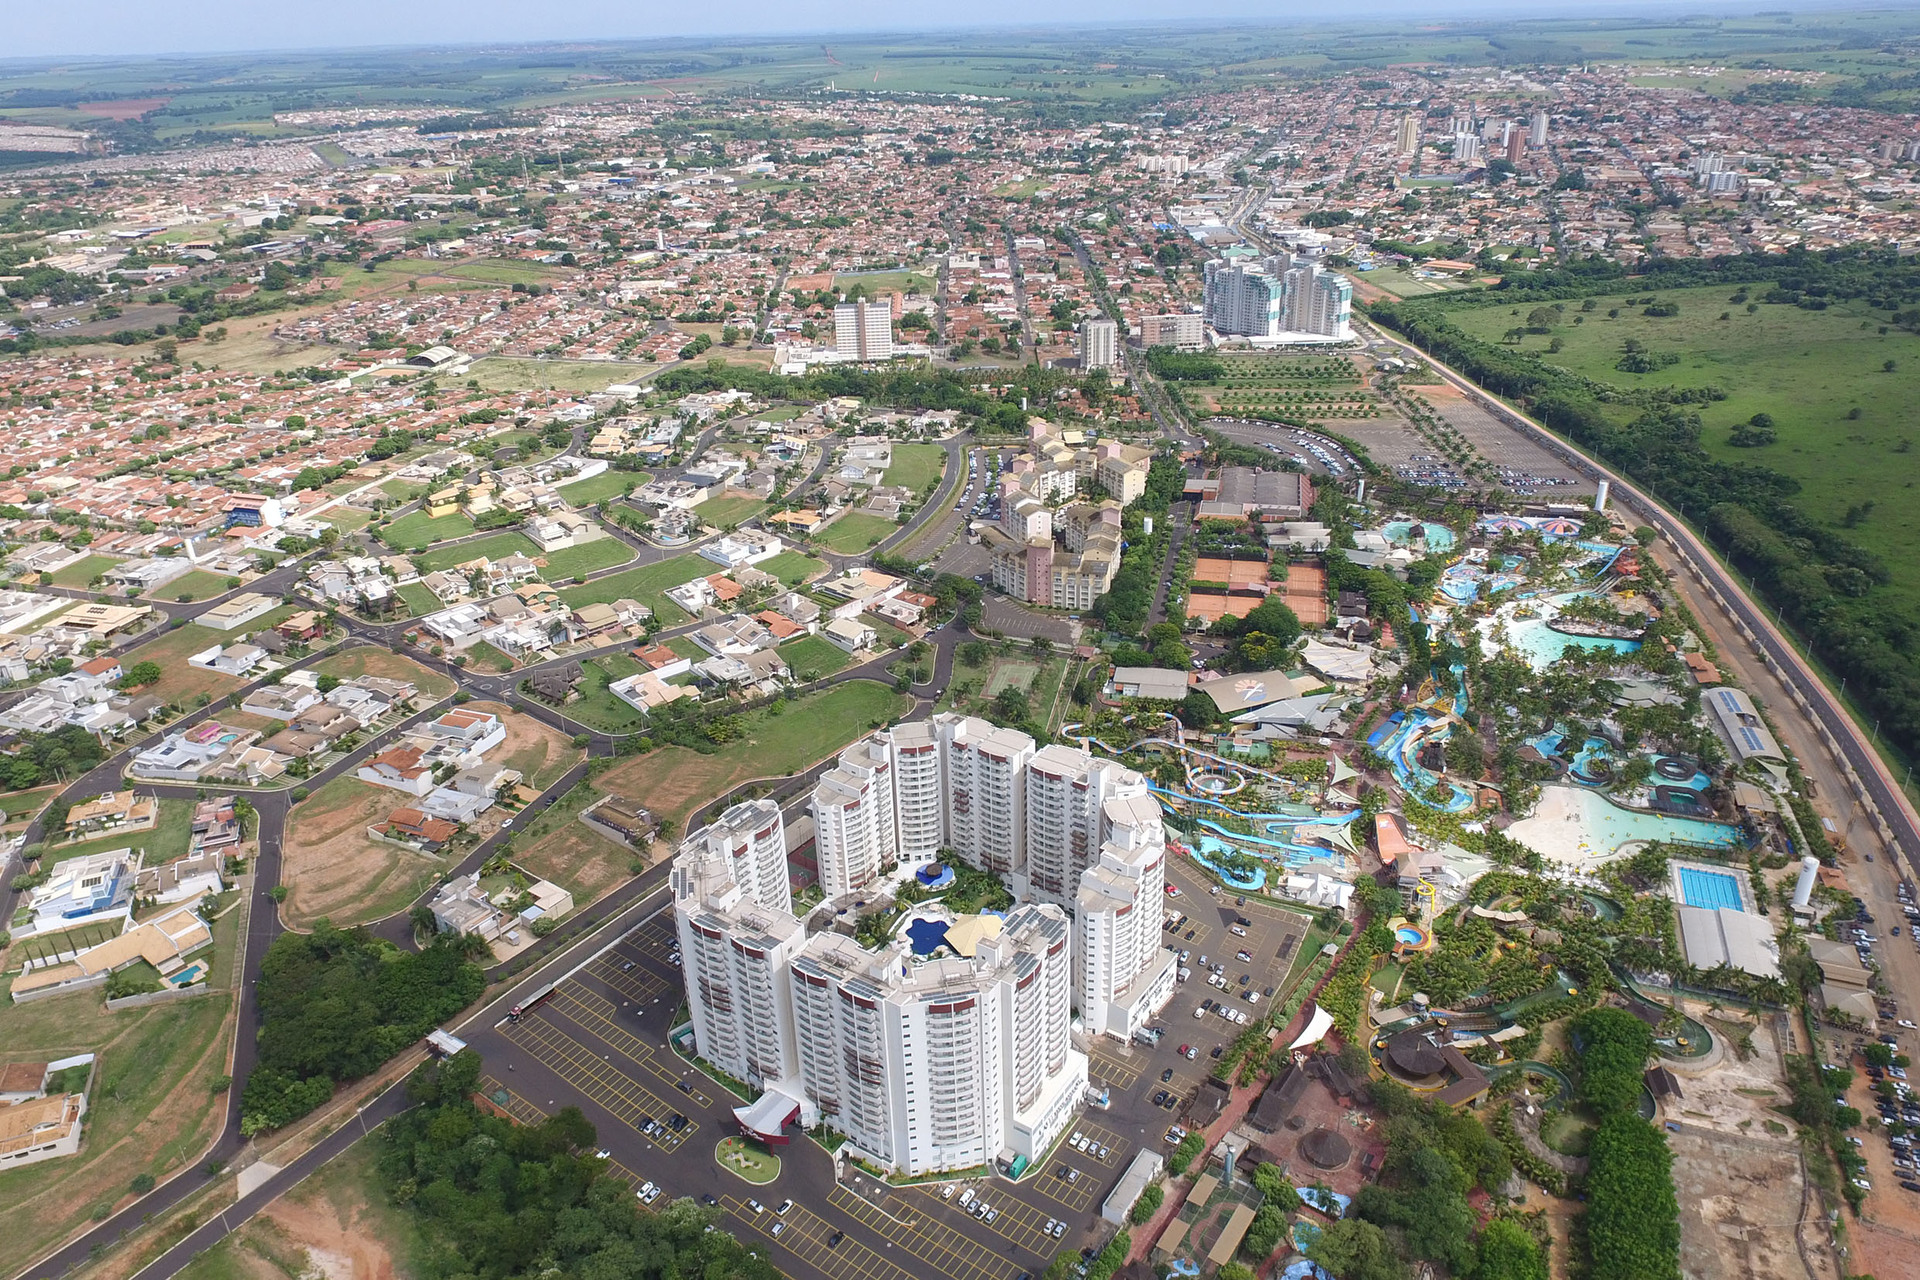 Vista aérea da cidade de Olímpia, no noroeste paulista, que é chamada de a “Orlando brasileira”